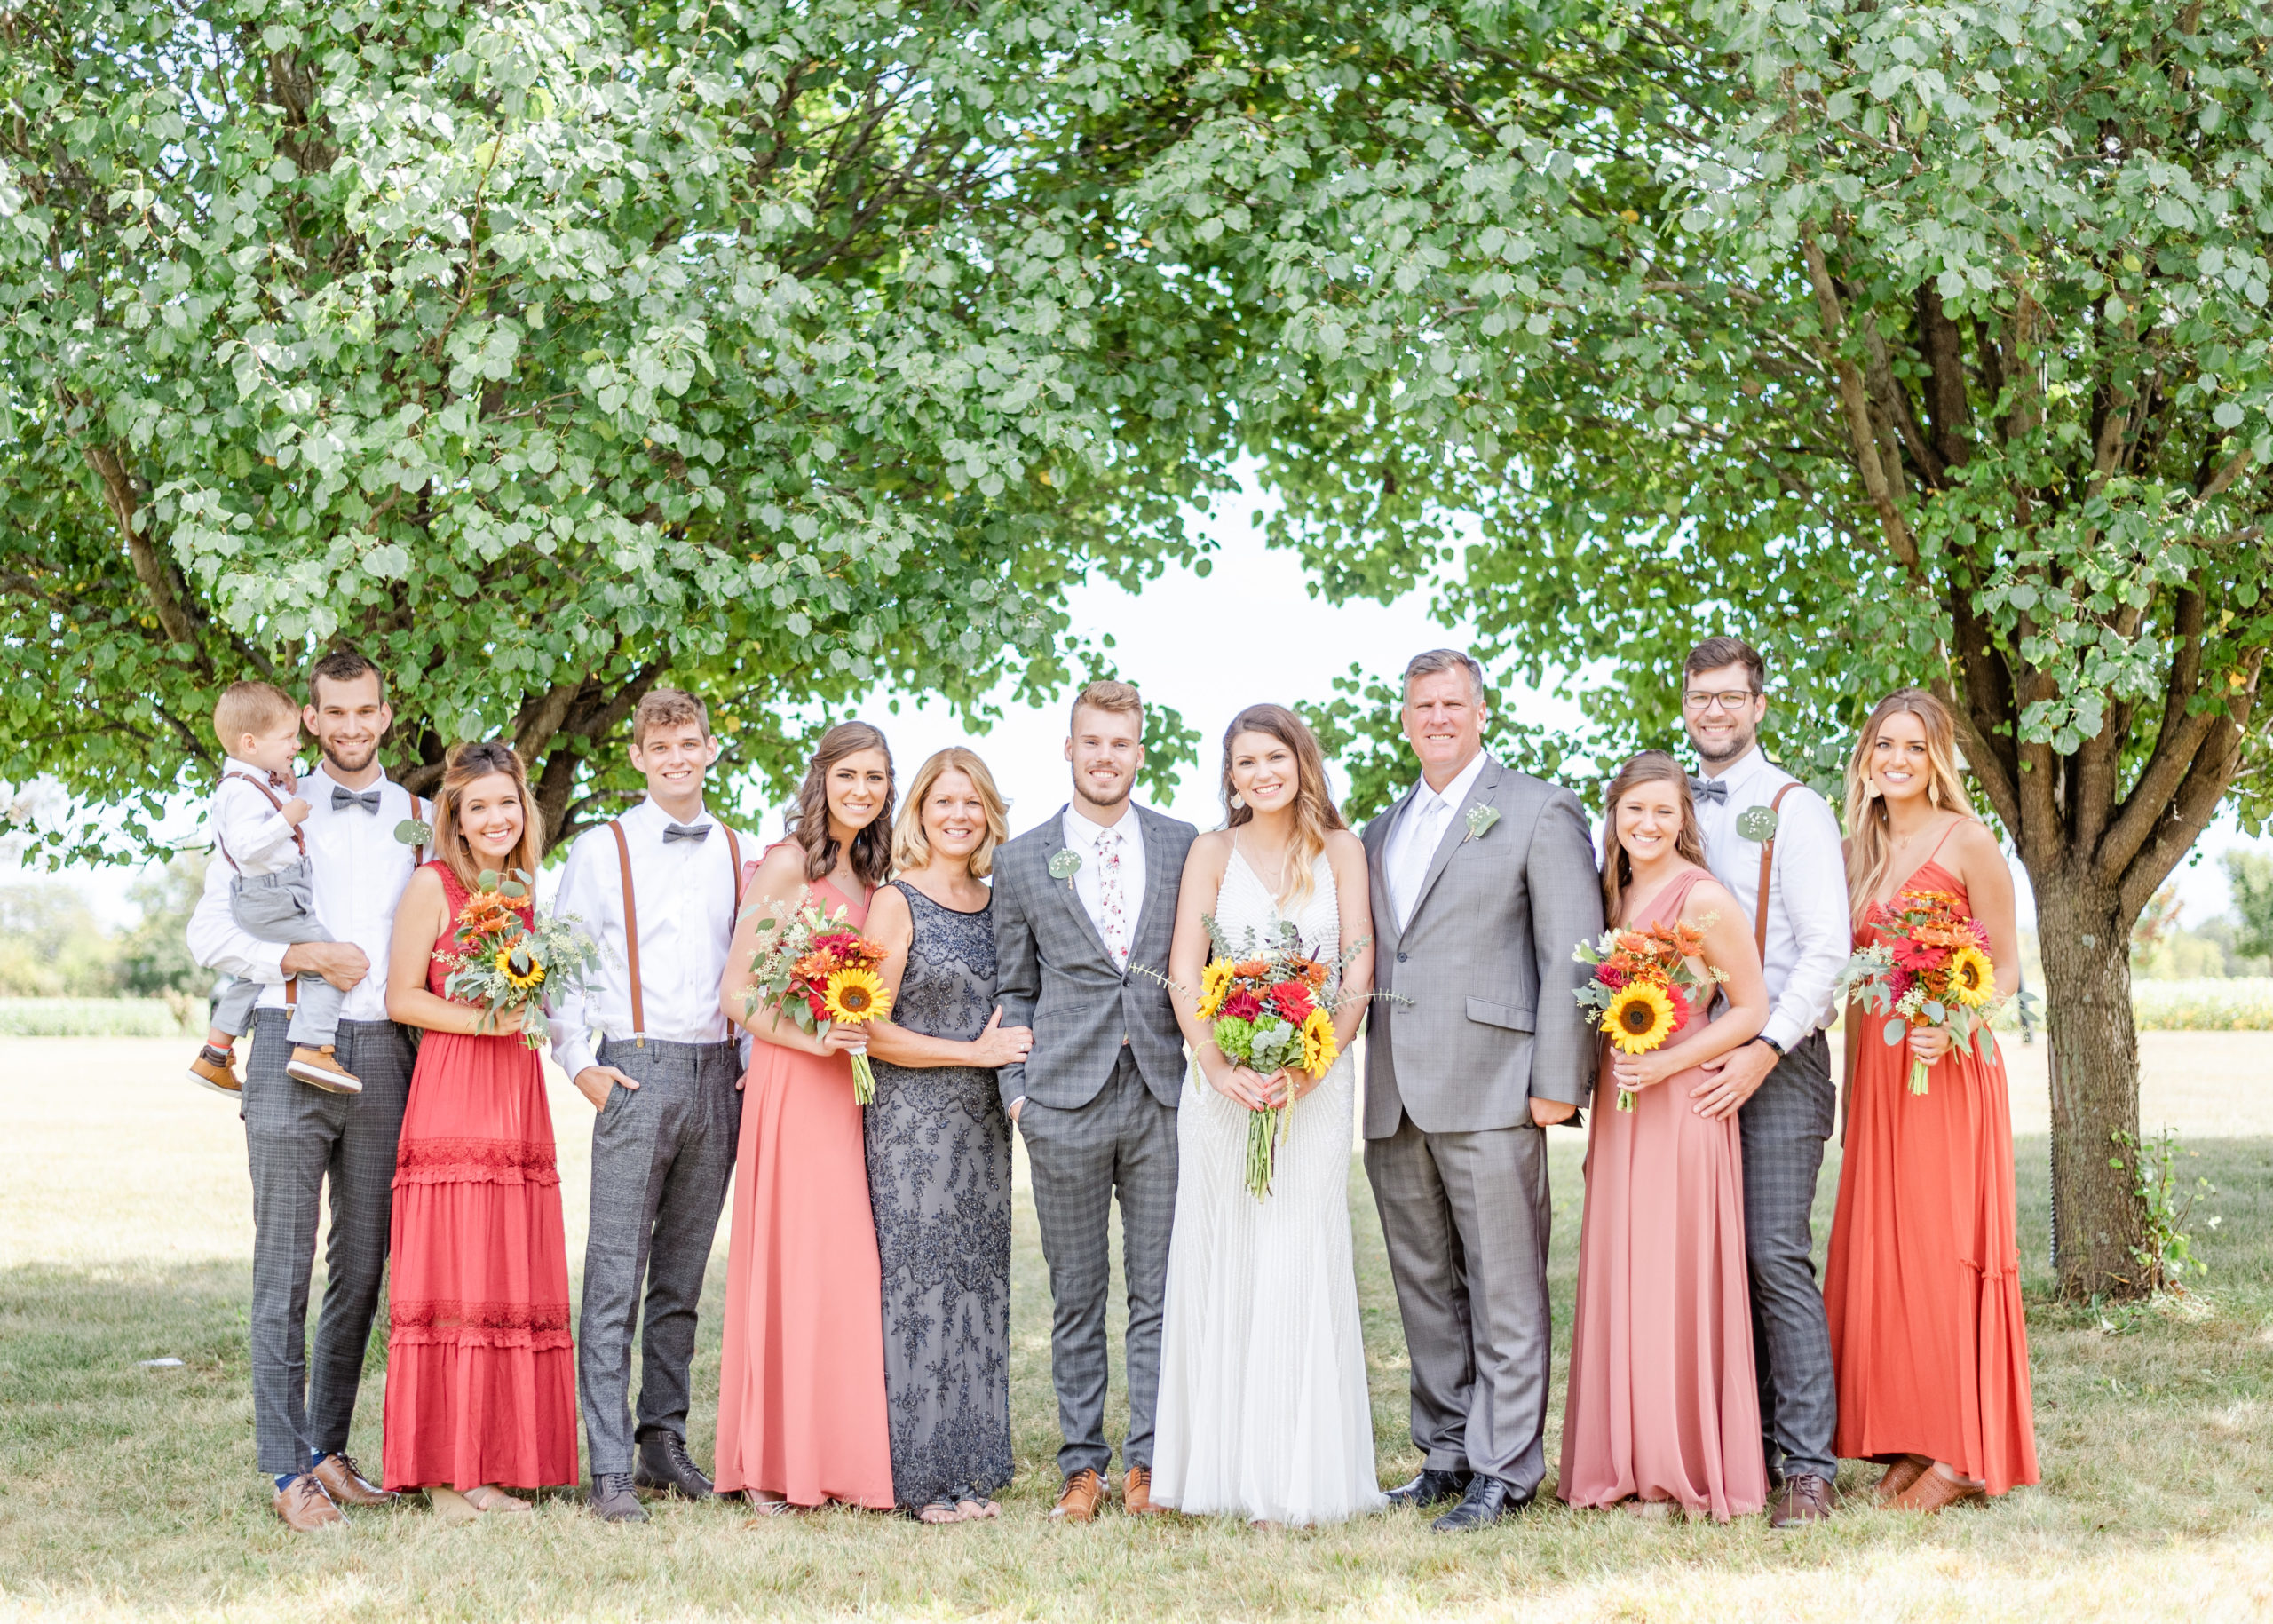 Family formals for Atlanta, Georgia wedding